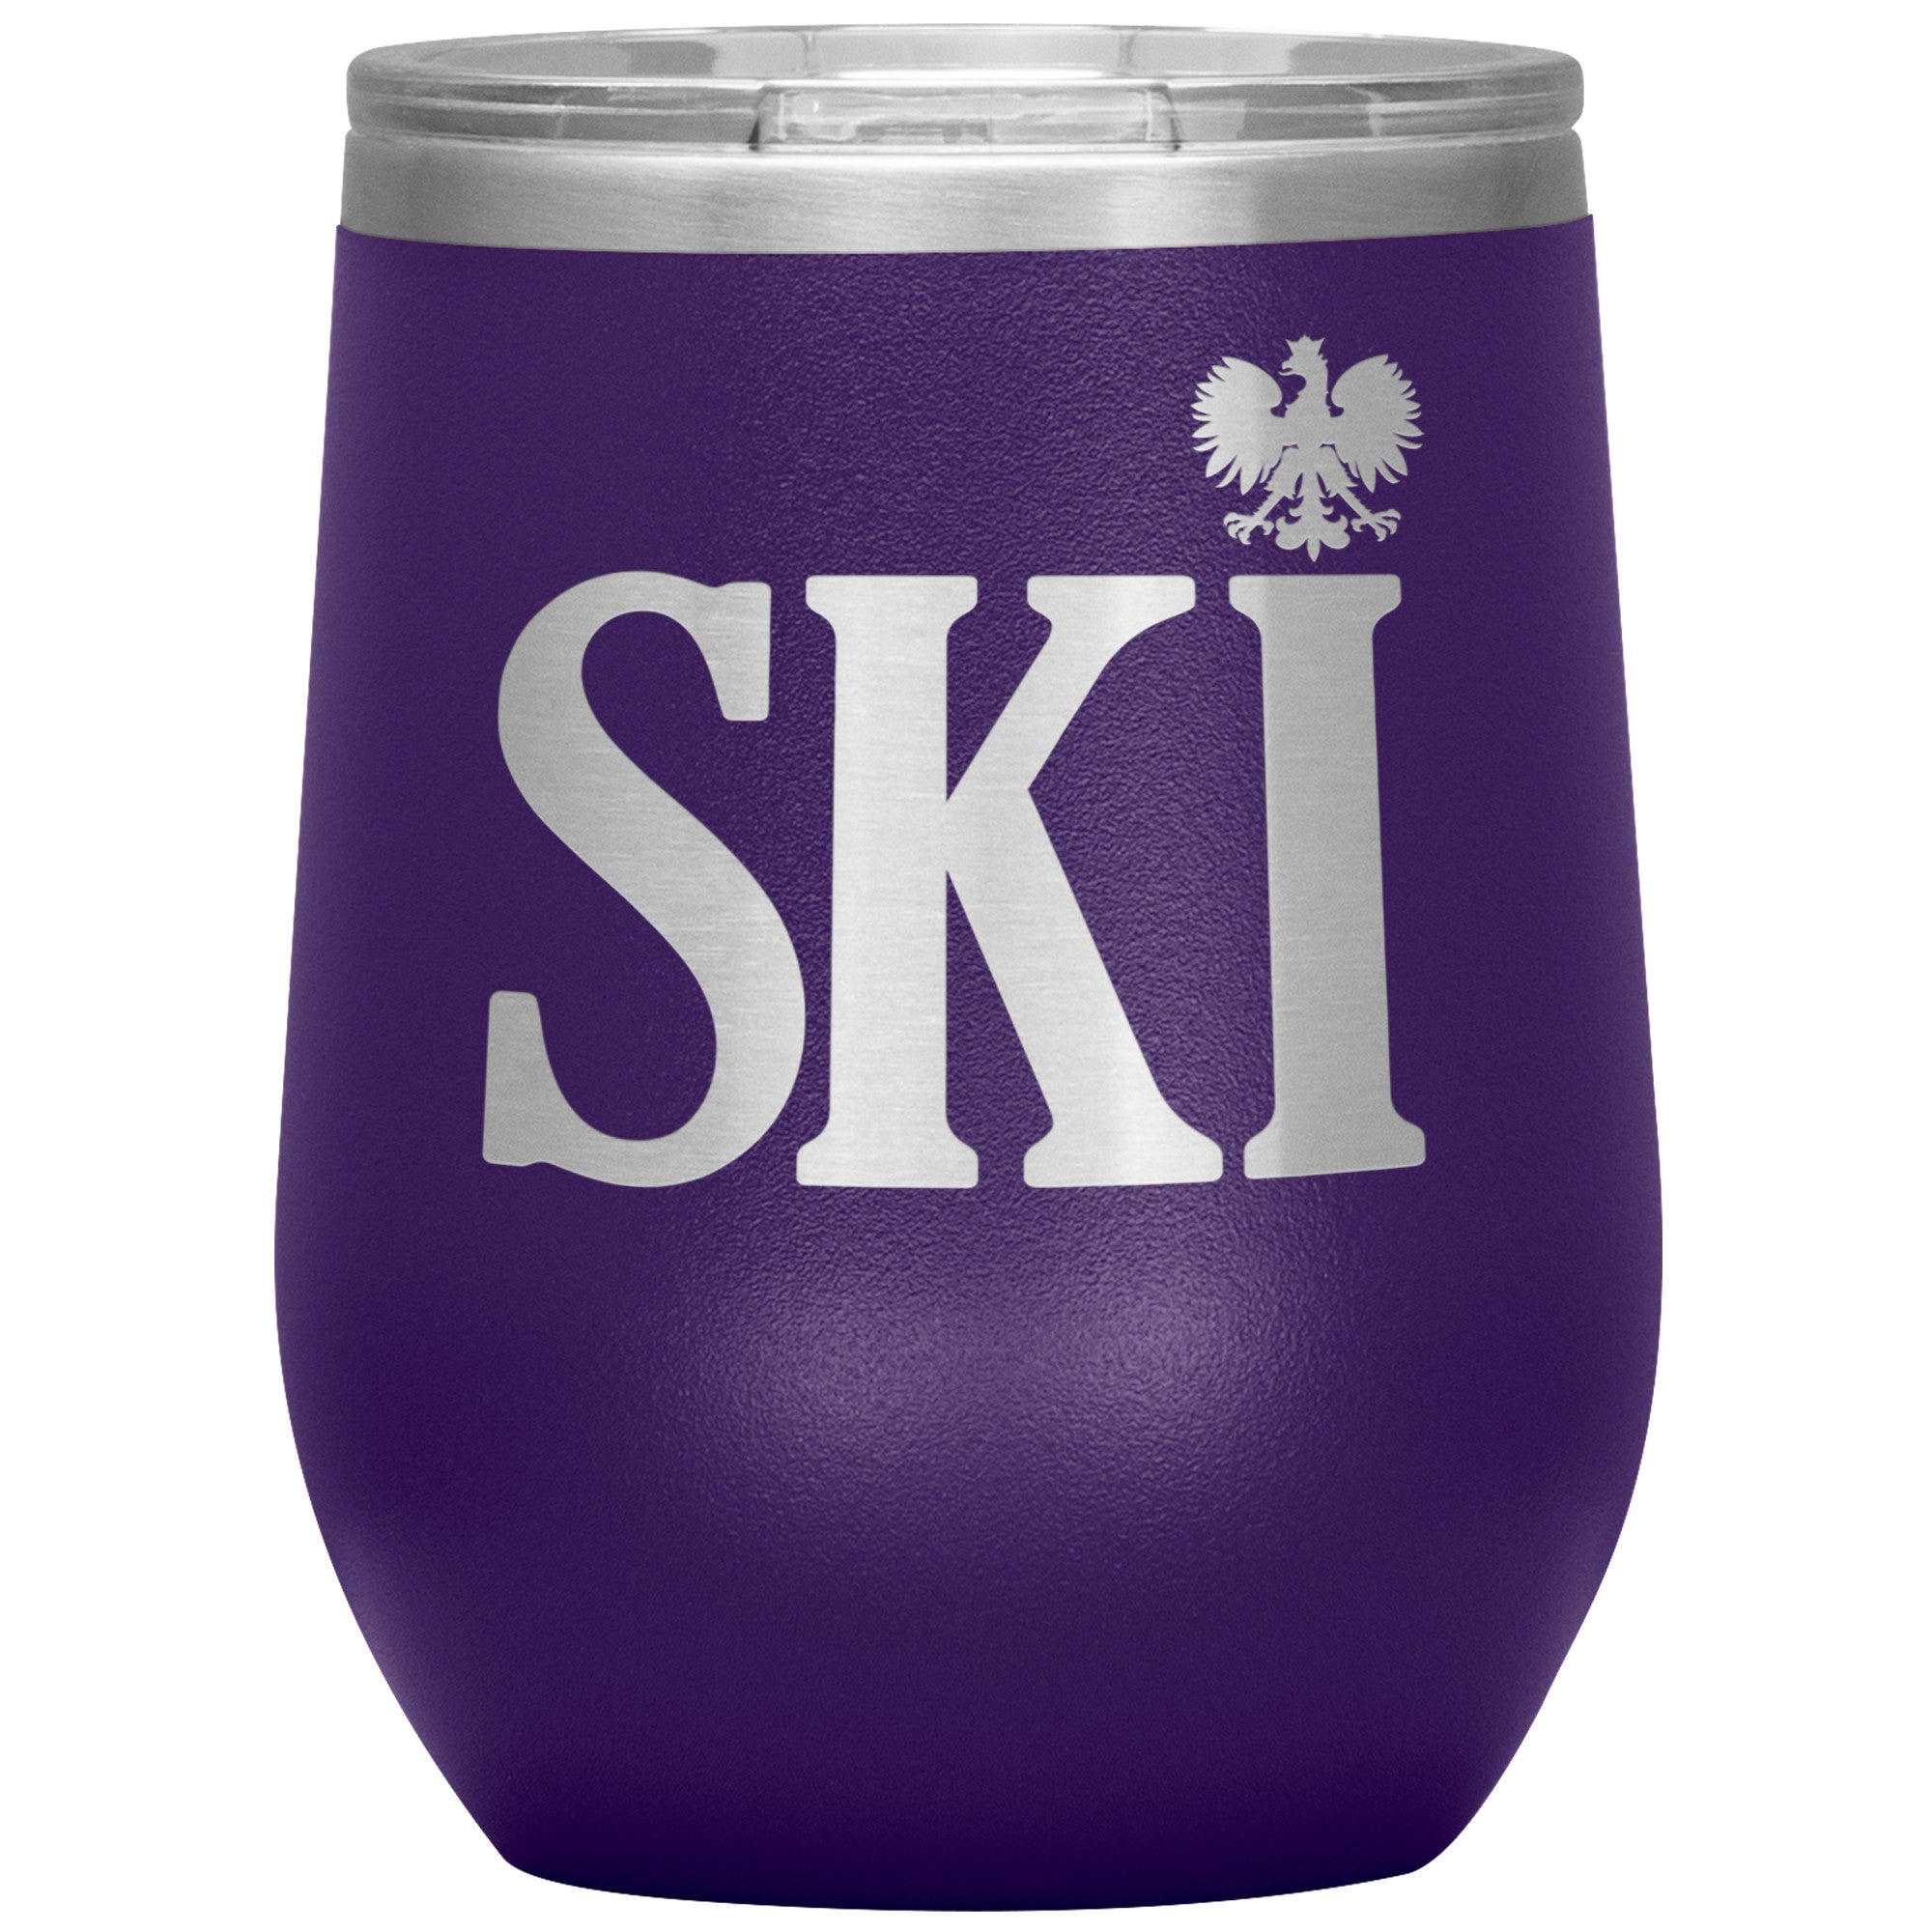 Polish Surnames Ending In SKI Insulated Wine Tumbler Tumblers teelaunch Purple  